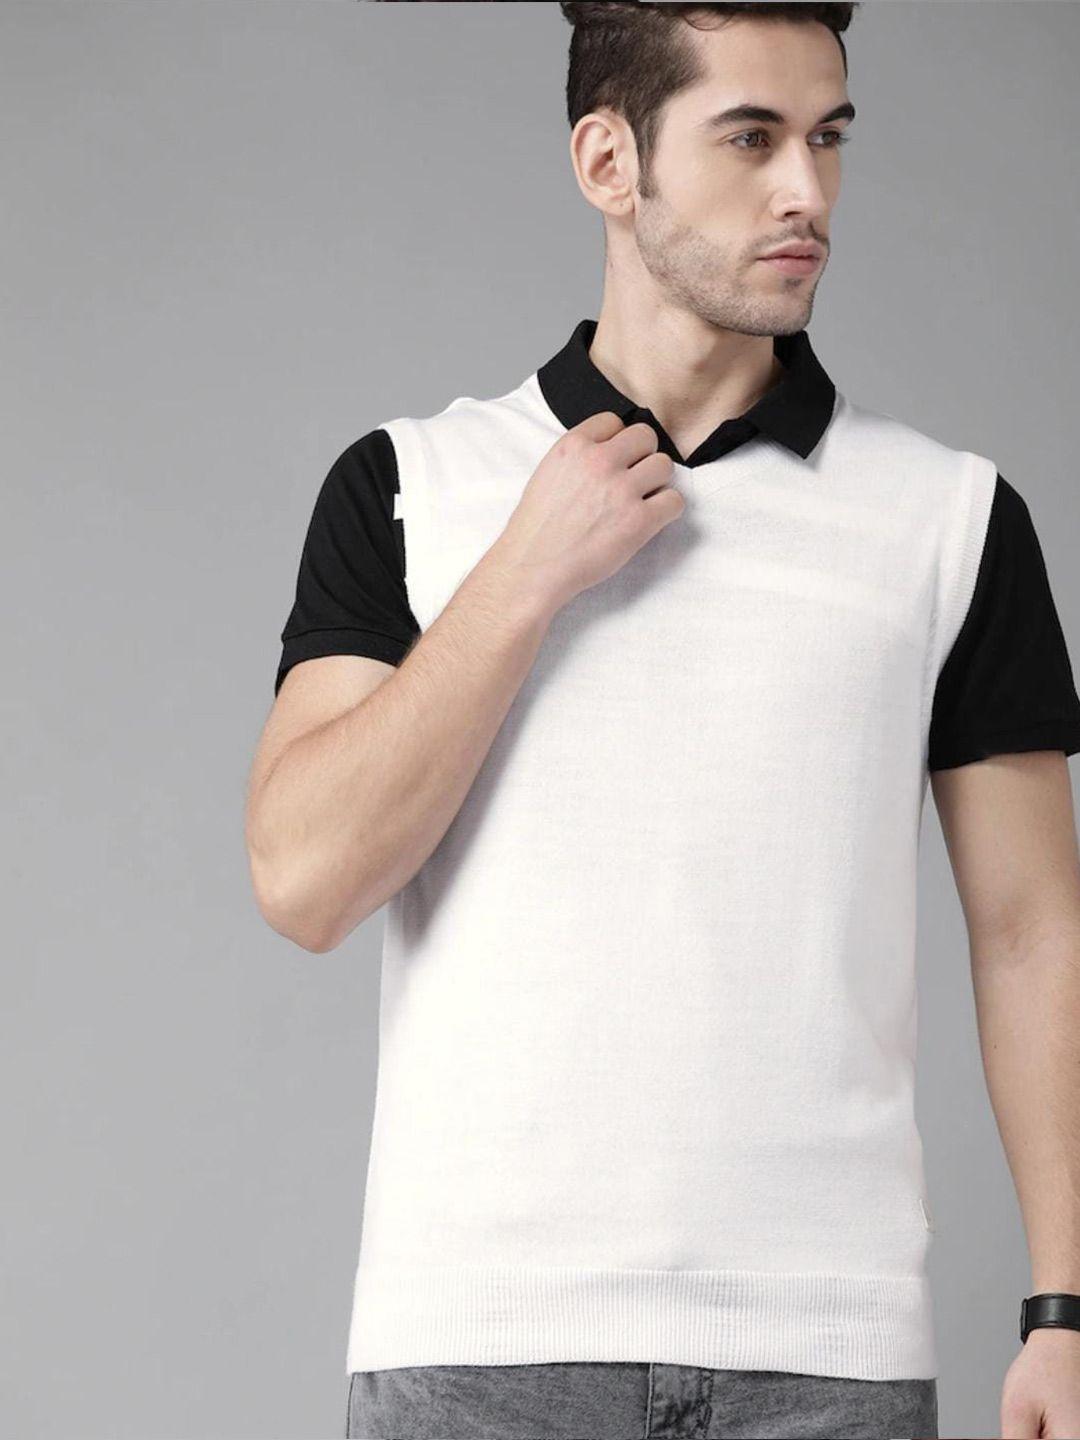 the roadster lifestyle co. white sleeveless acrylic sweater vest